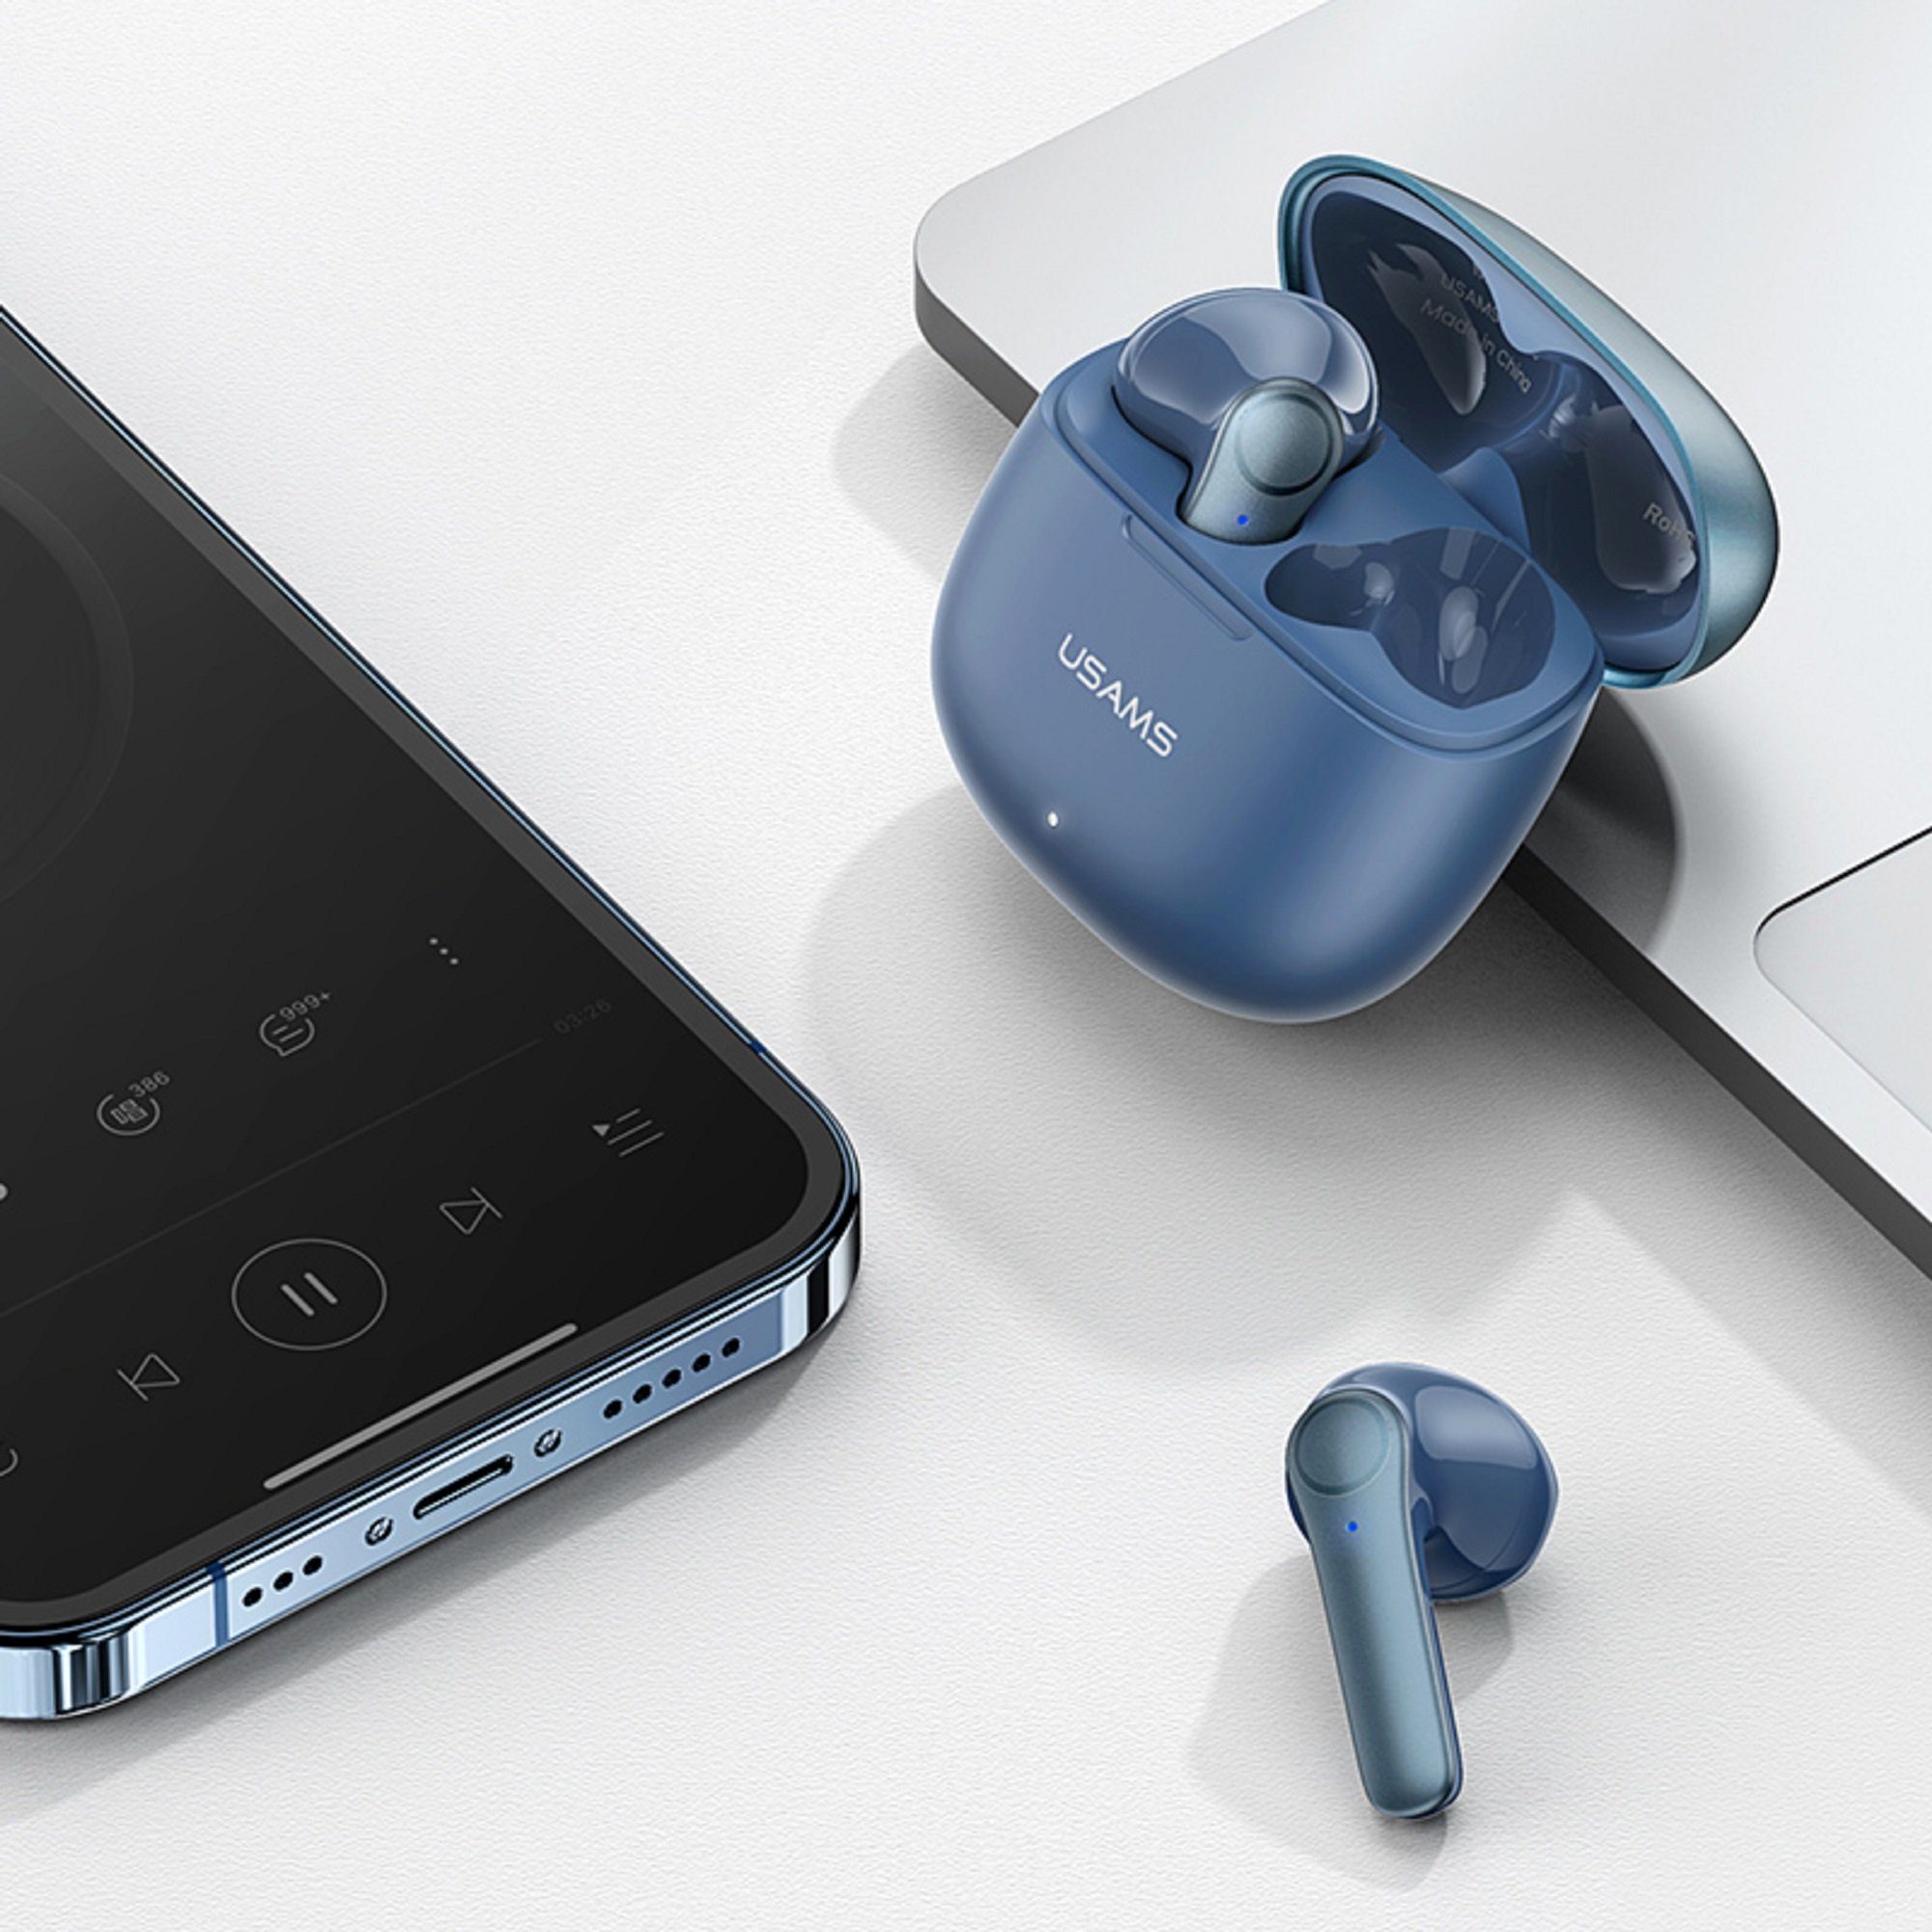 Bluetooth, Samsung USAMS Weiß BT TWS 5.1 Bluetooth (Bluetooth, Bluetooth-Kopfhörer Huawei iPhone In-Ear Kopfhörer Ohrhörer Touch für Smartphone Control, LG) Kabellos Touch-Funktion,